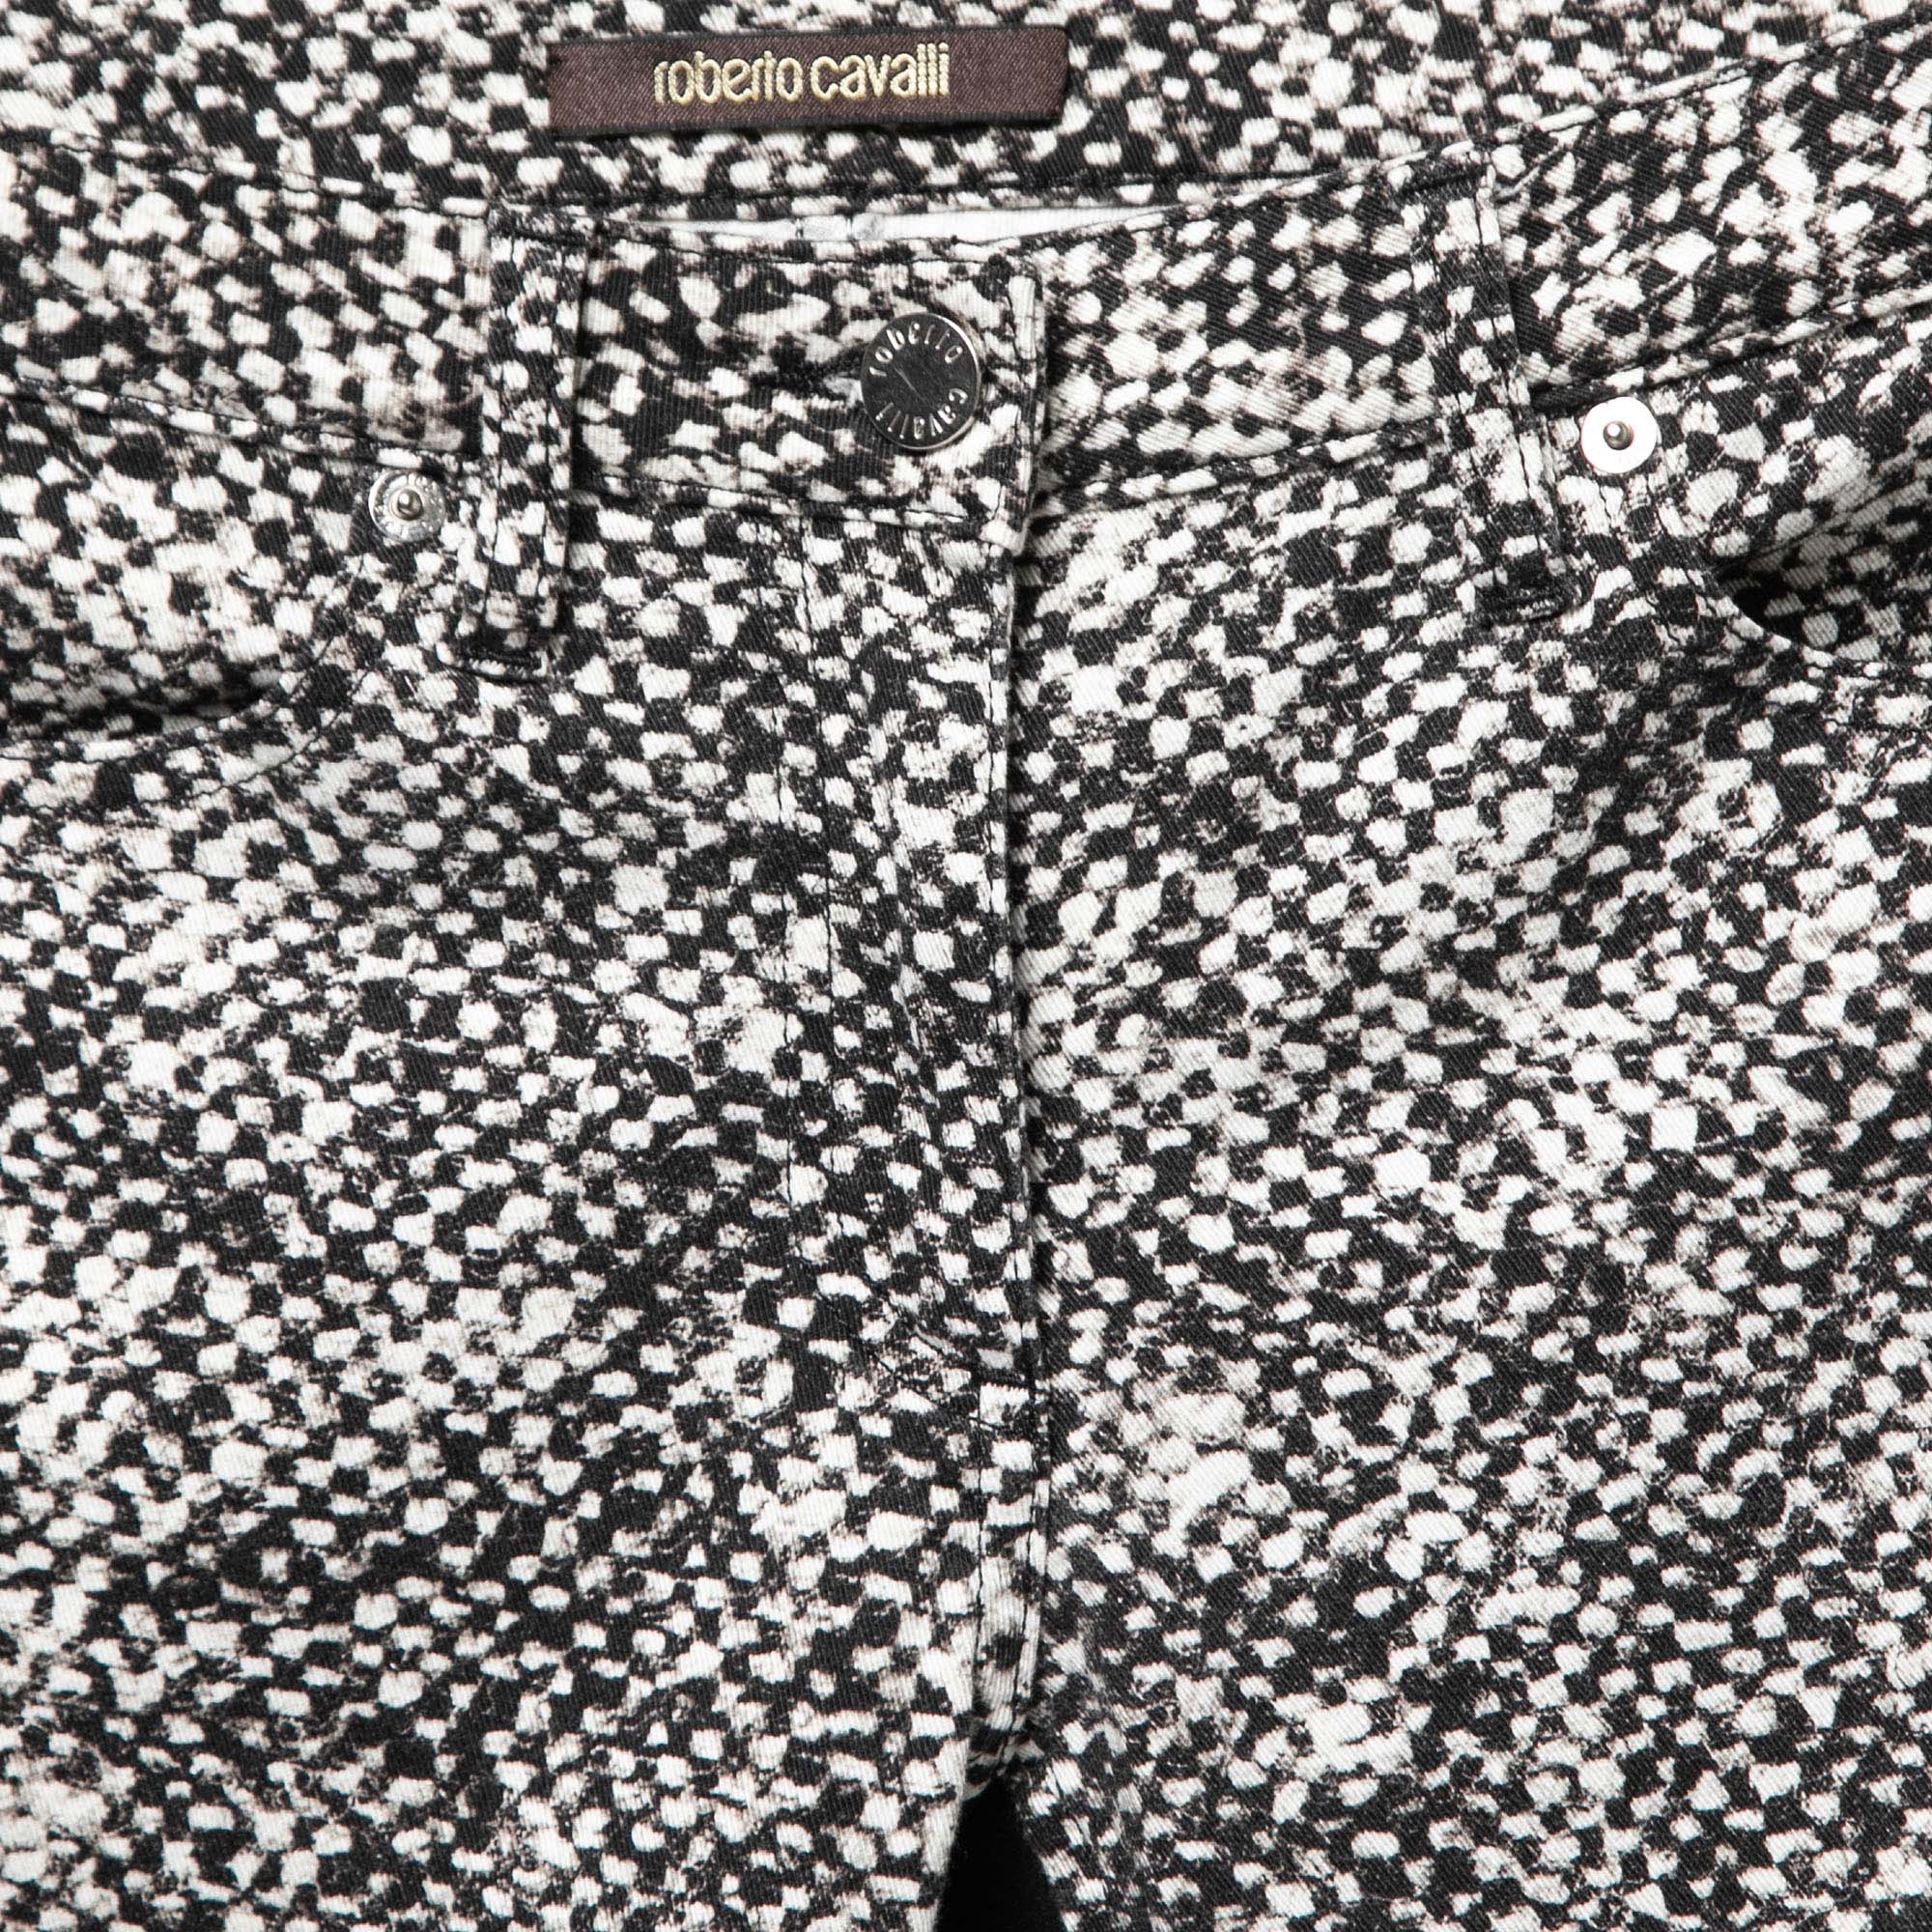 Roberto Cavalli Monochrome Printed Cotton Knit Trimmed Slim Fit Jeans M Waist 31